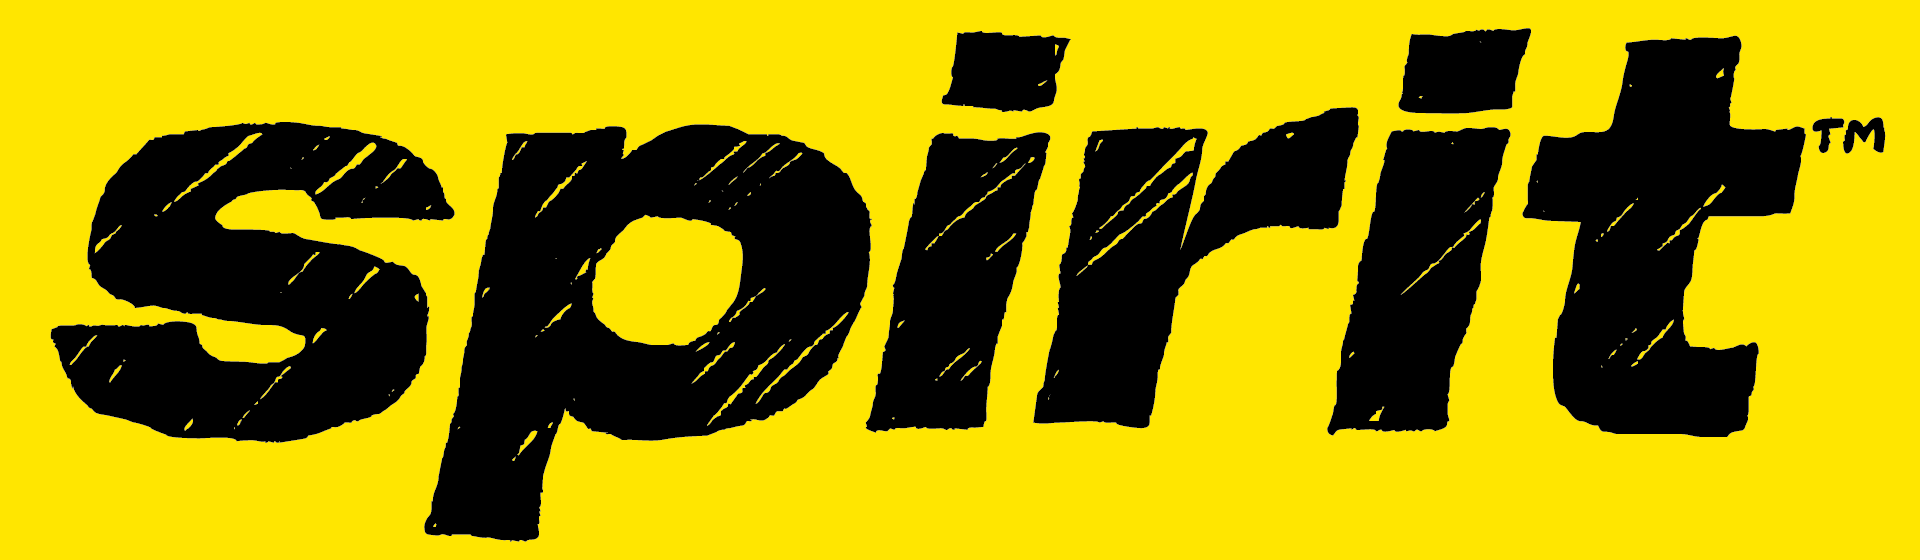 Spirit Airlines Brand Logo